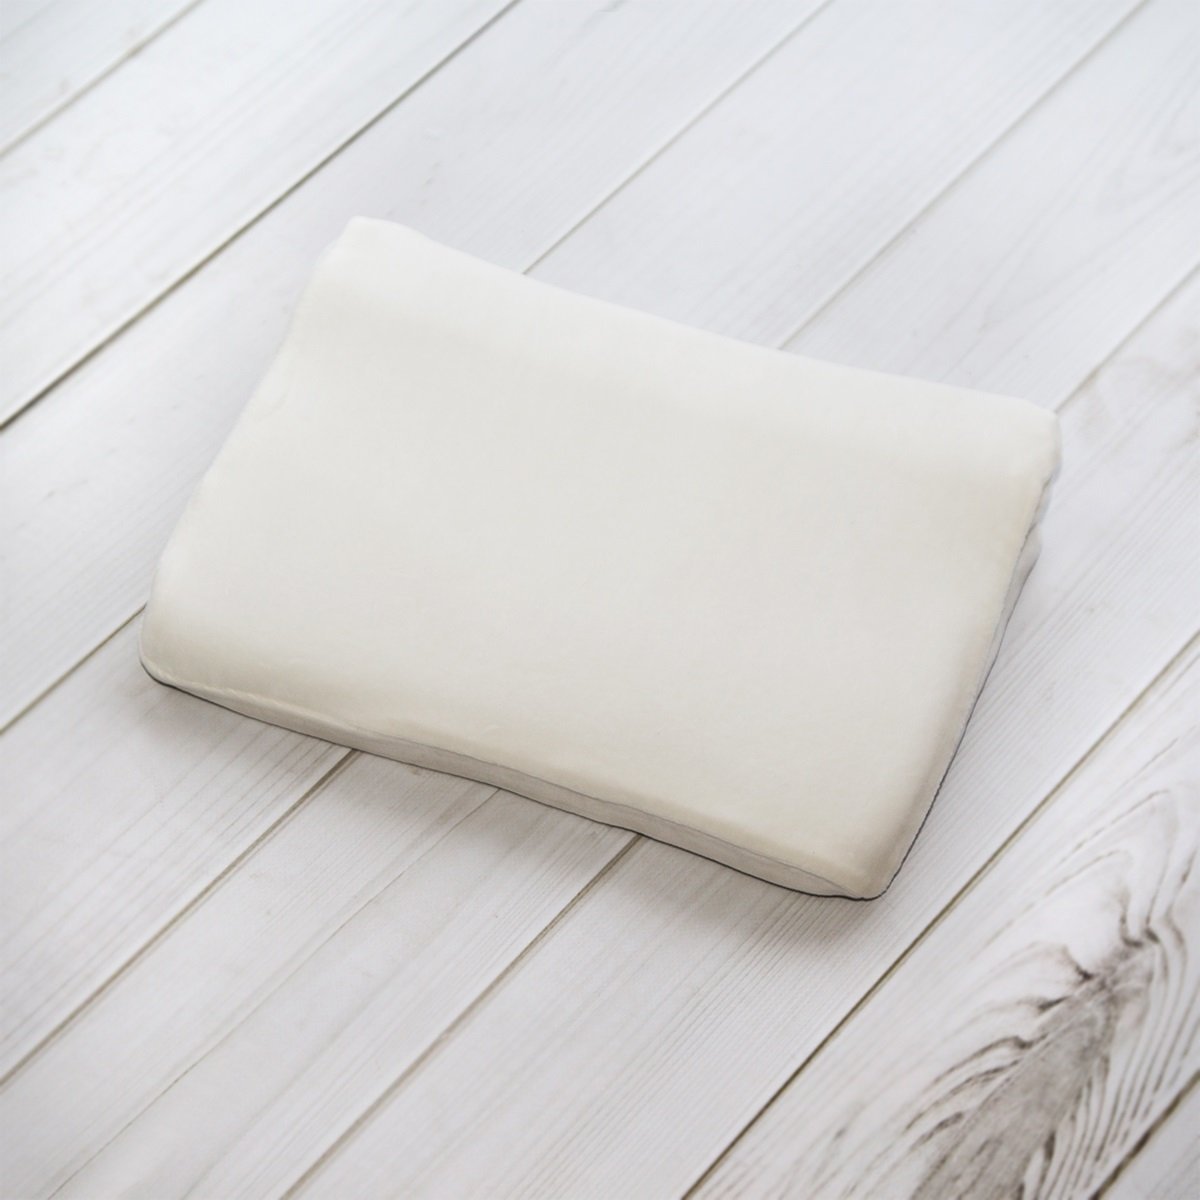 latex pillows photo options